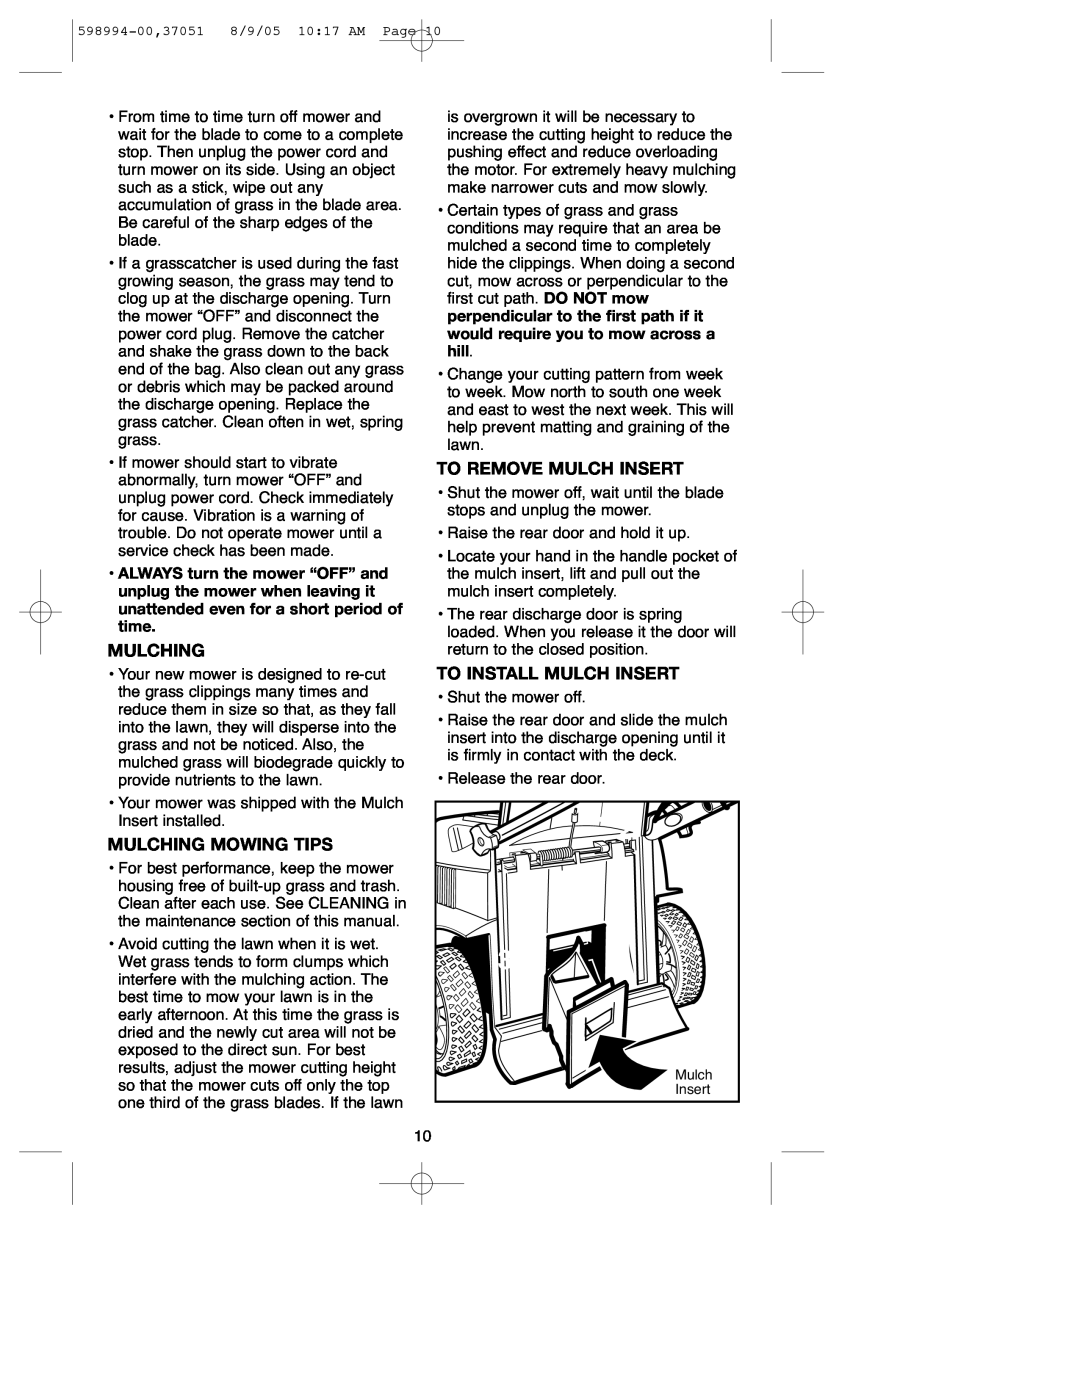 DeWalt 900.37051 instruction manual Mulching Mowing Tips, To Remove Mulch Insert, To Install Mulch Insert 